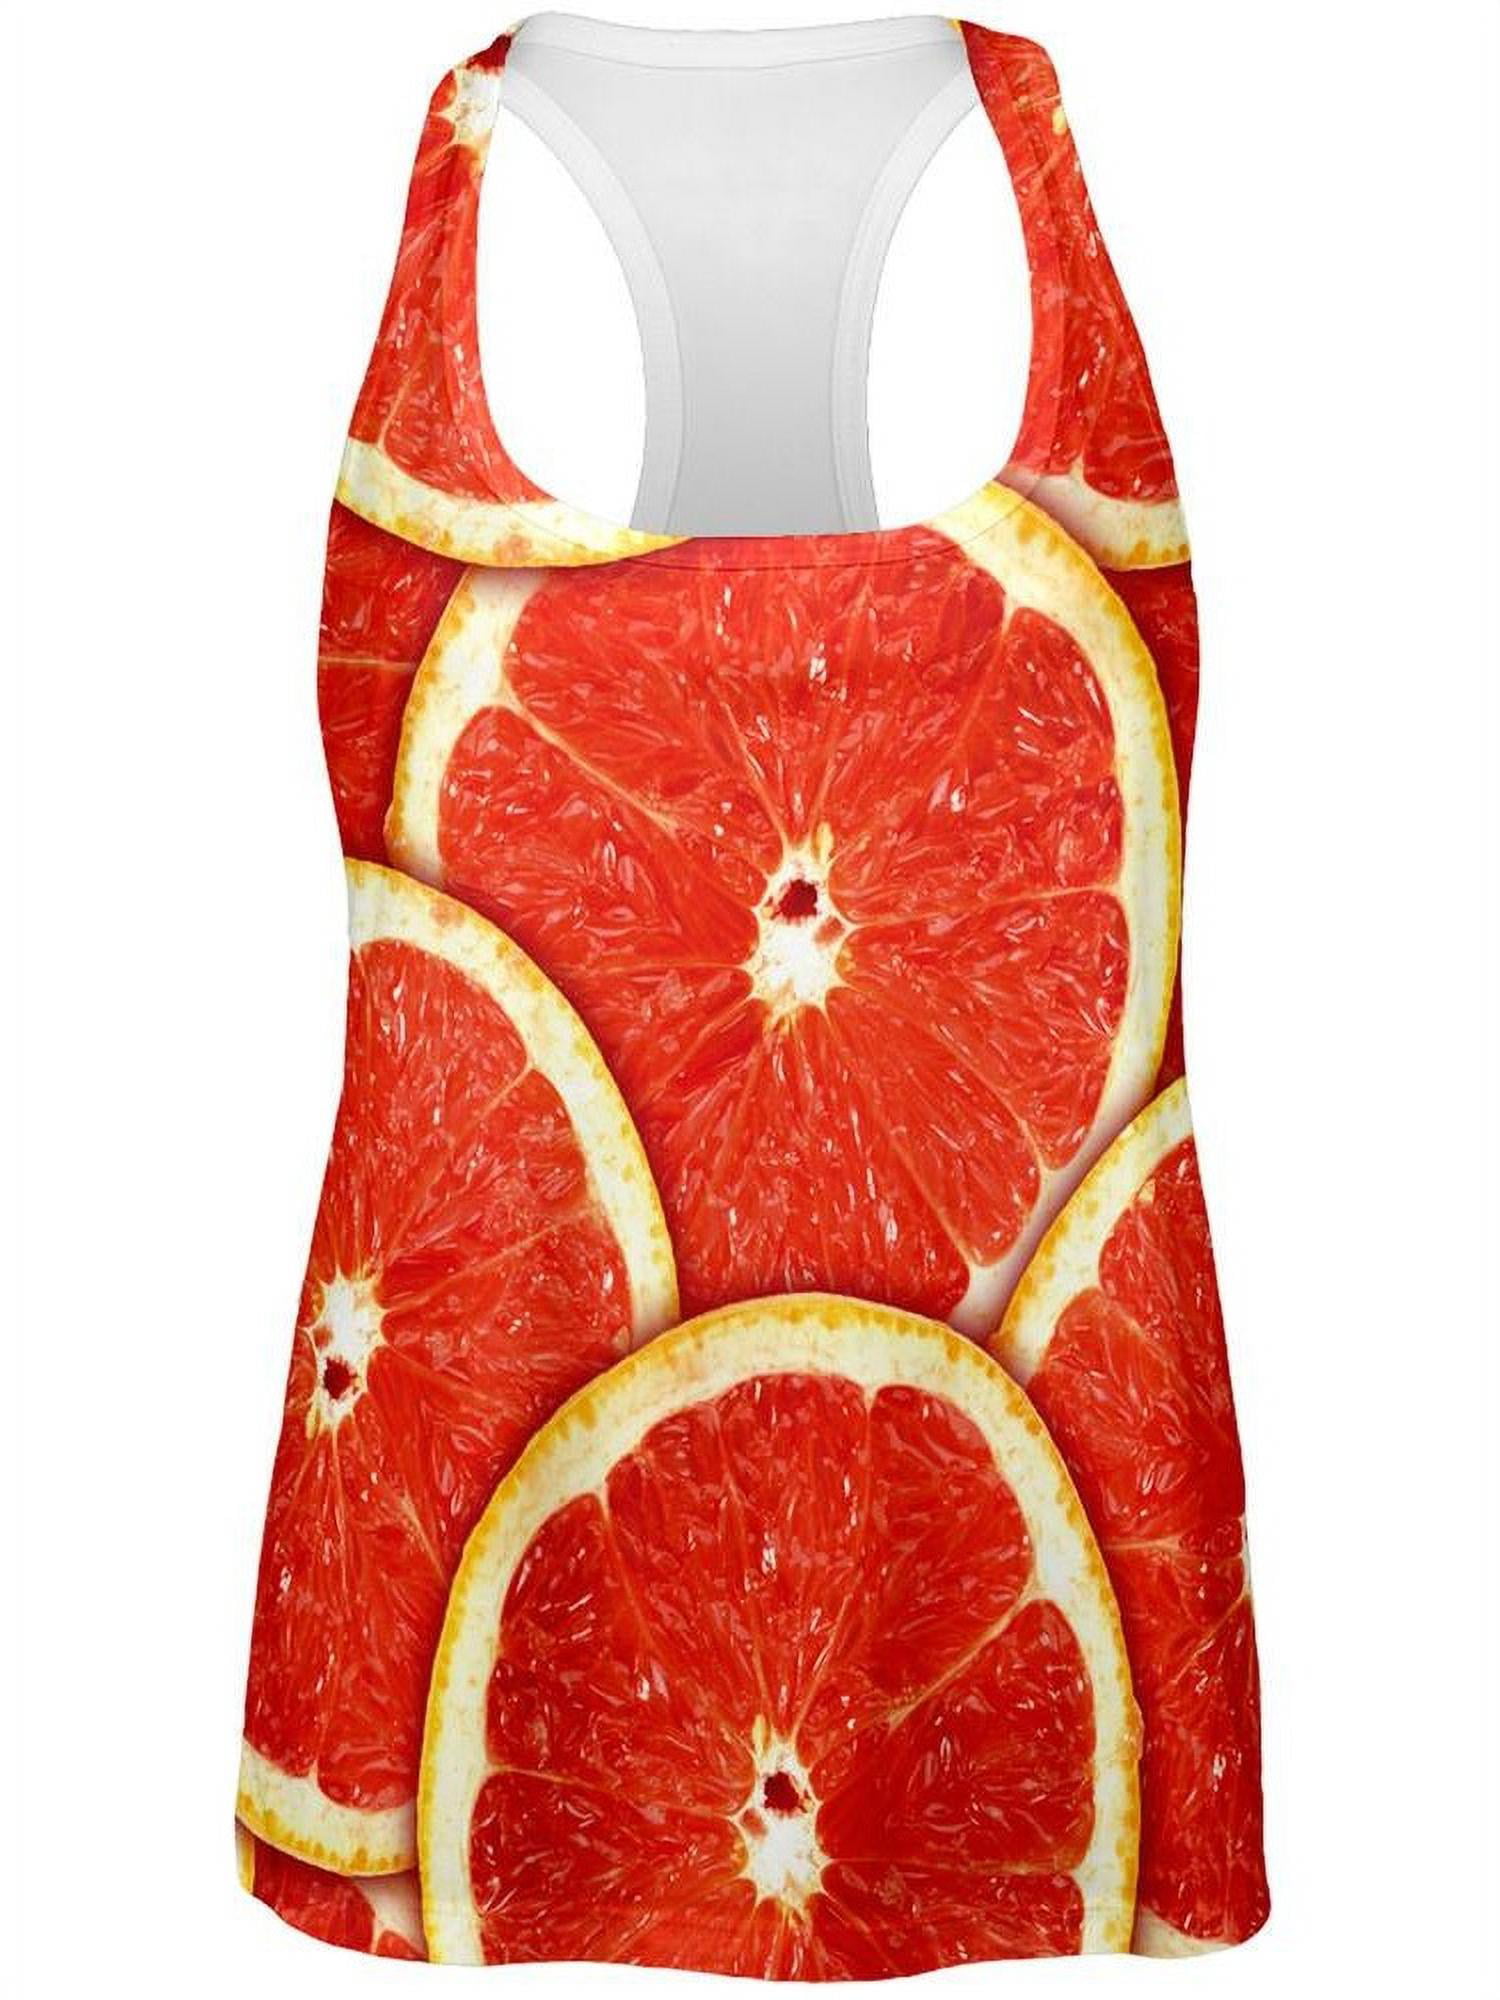 Grapefruit Citrus All Over Adult T-Shirt 